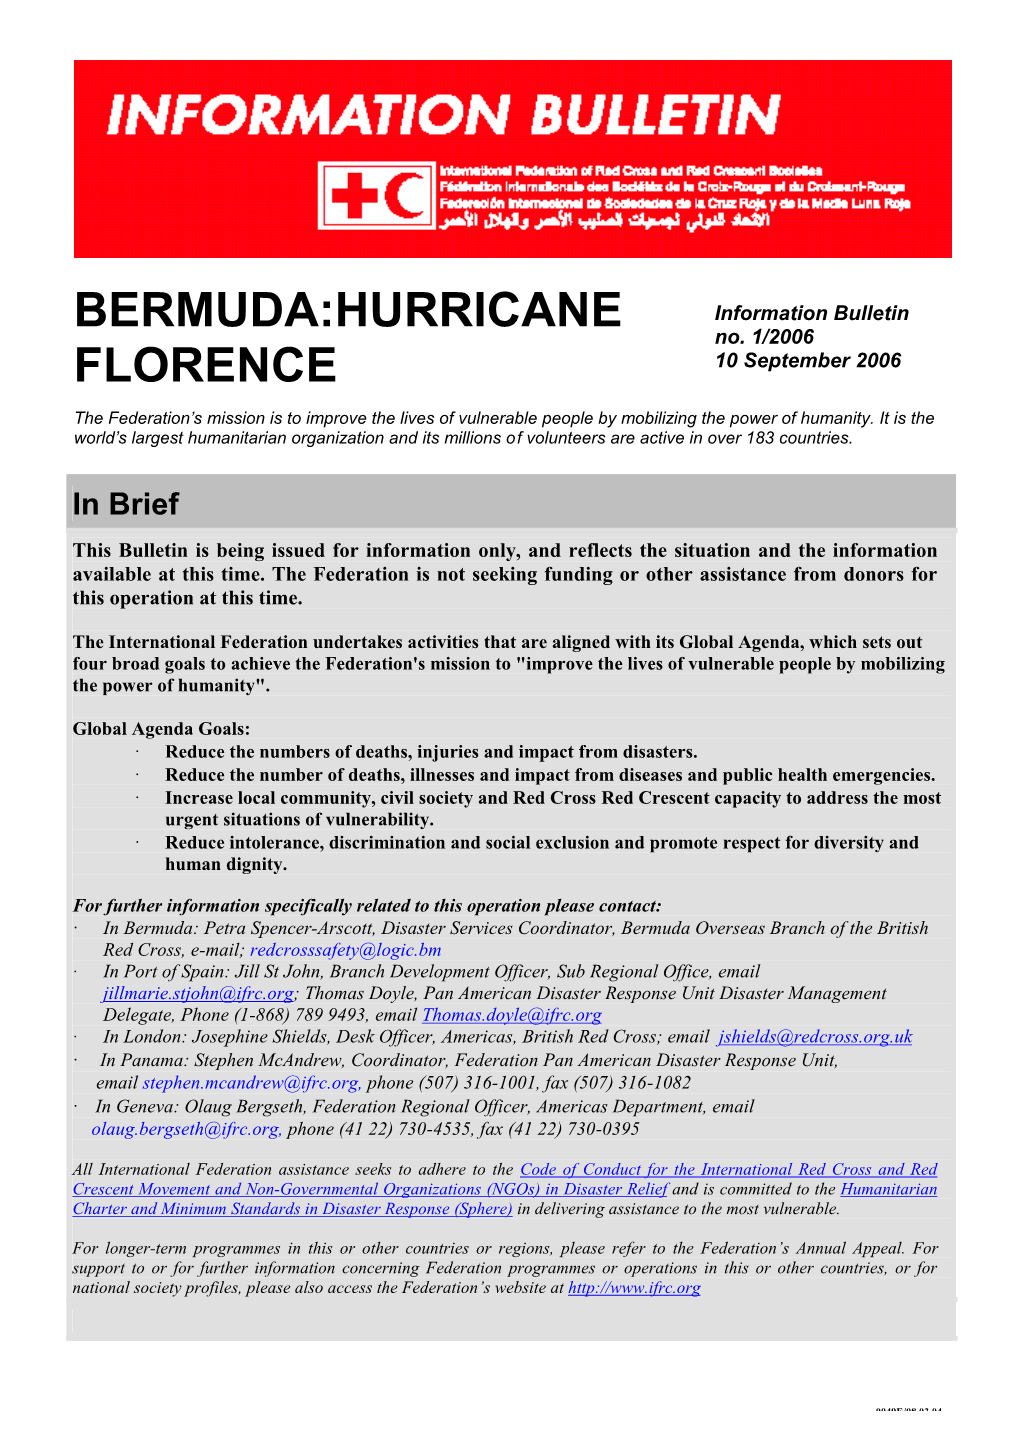 Bermuda:Hurricane Florence